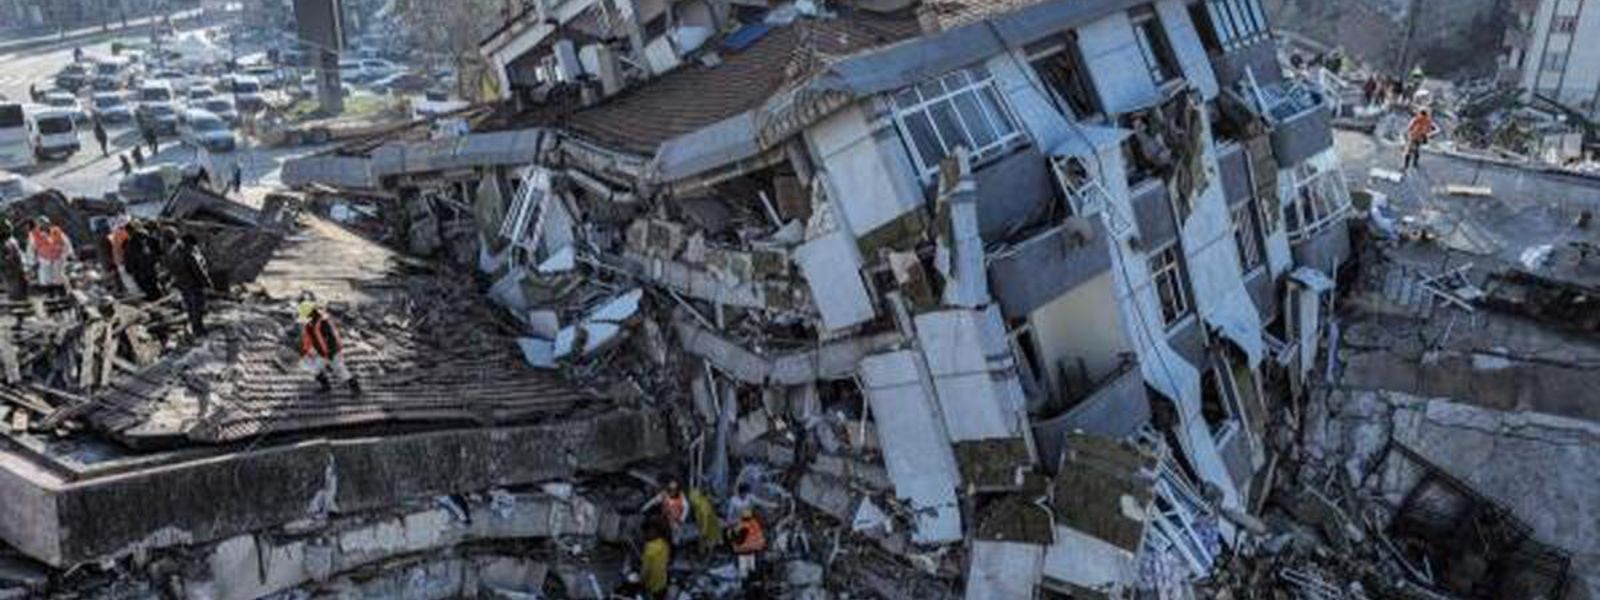 Türkiye earthquake death toll exceeds 35,000